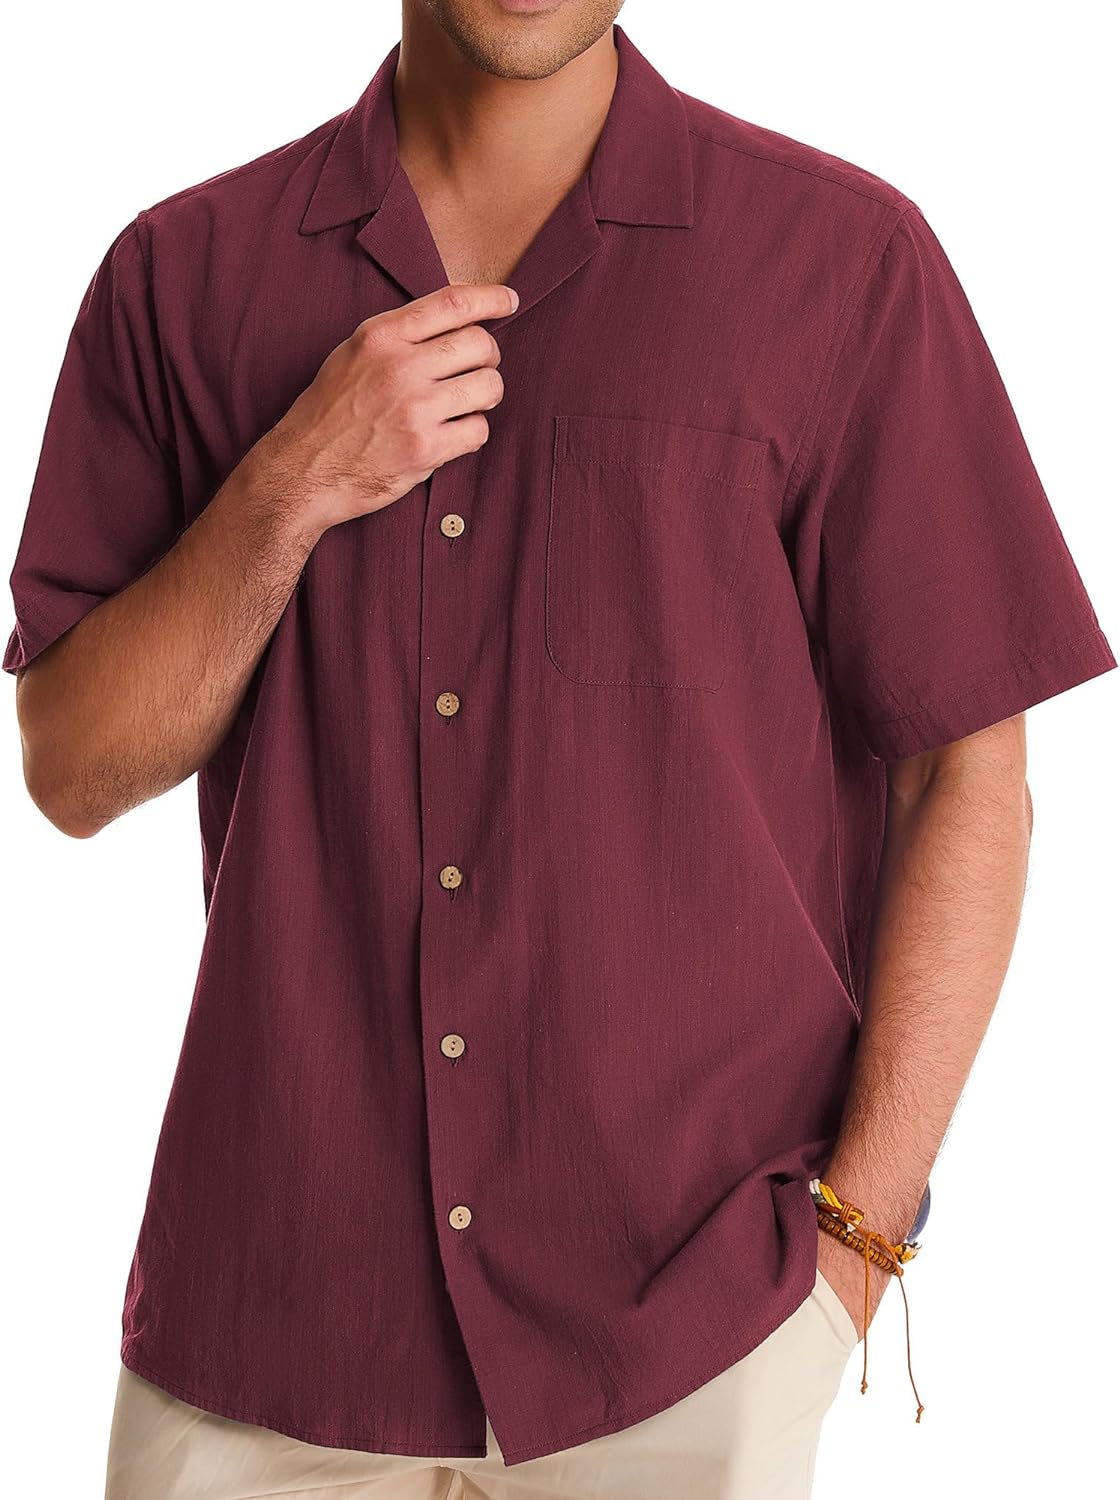 Alimens  Gentle Mens Linen Shirts Short Sleeve Button Down Shirts Casual Summer Beach Tops Cotton Hawaiian Shirts